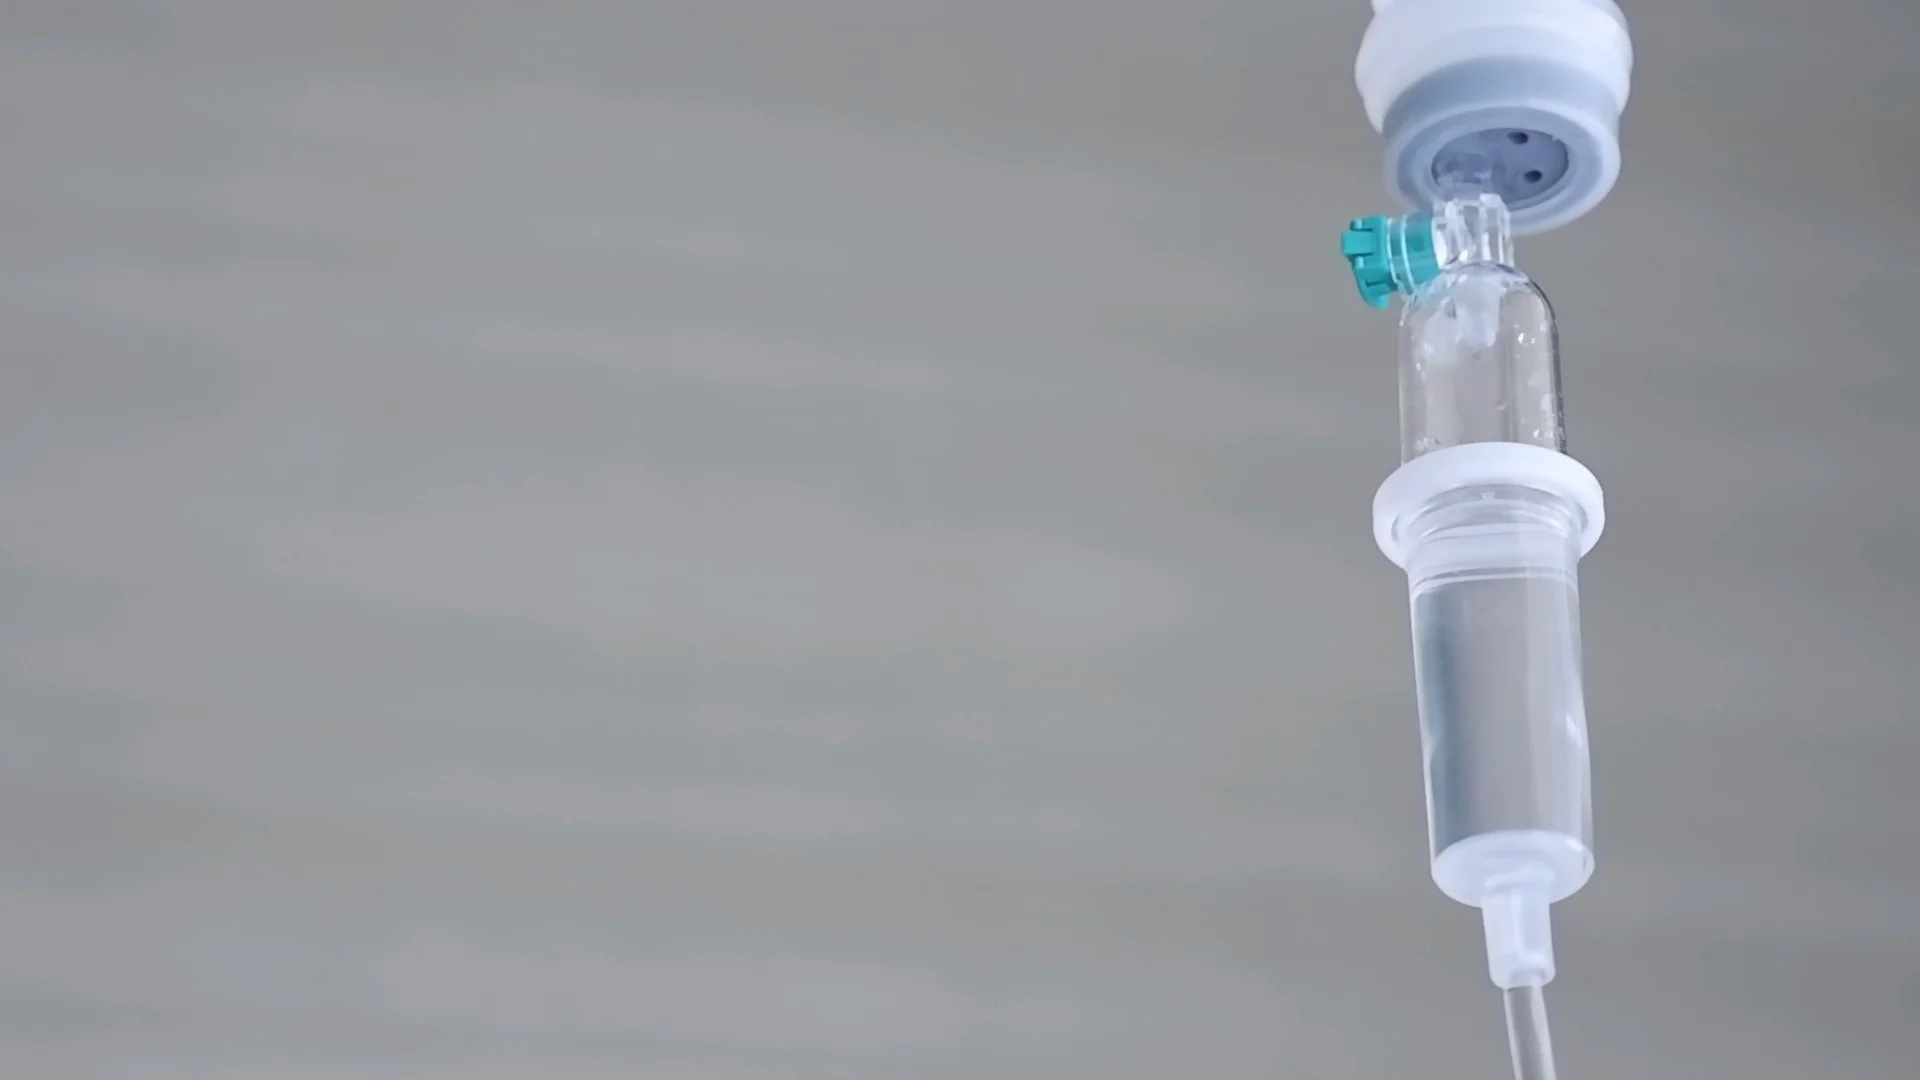 Set iv fluid intravenous vein drop salin, Stock Video